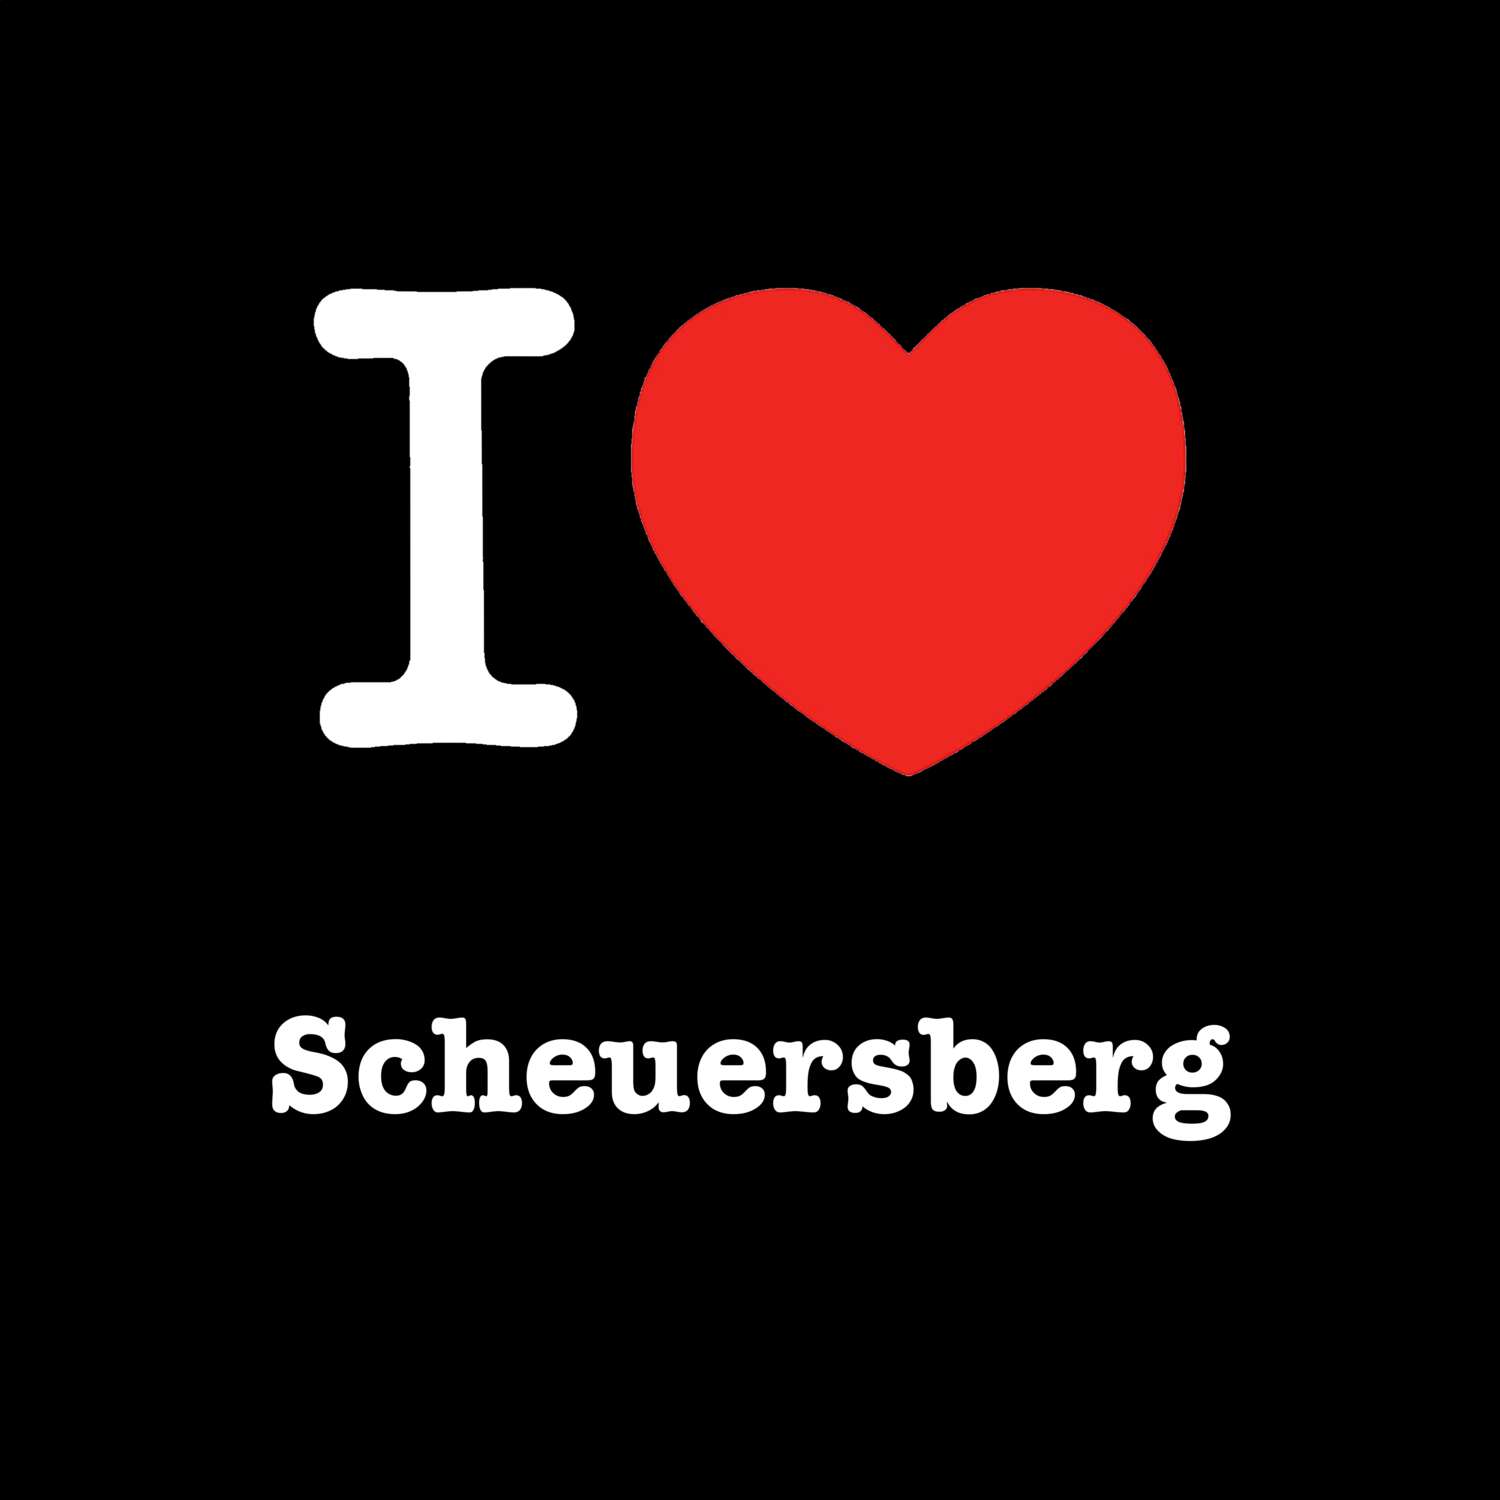 Scheuersberg T-Shirt »I love«